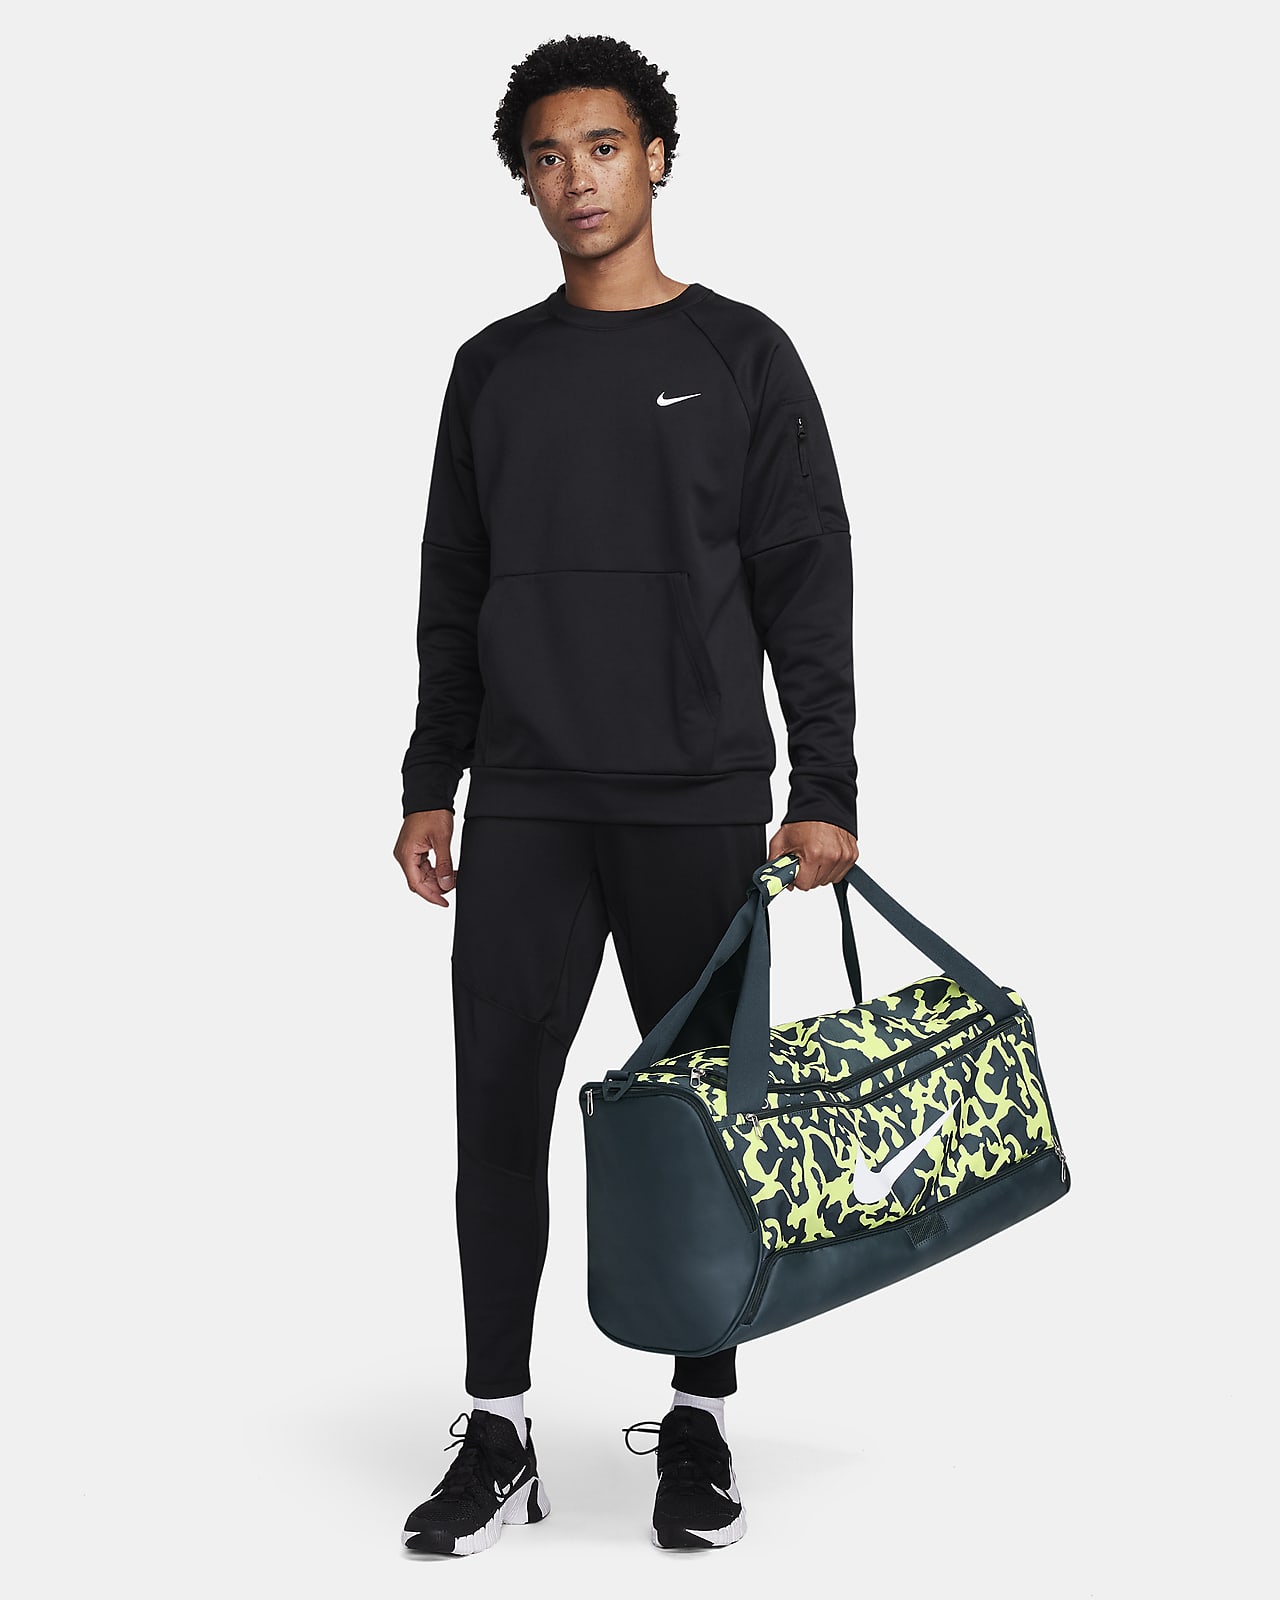 Duffel Bags. Nike CA